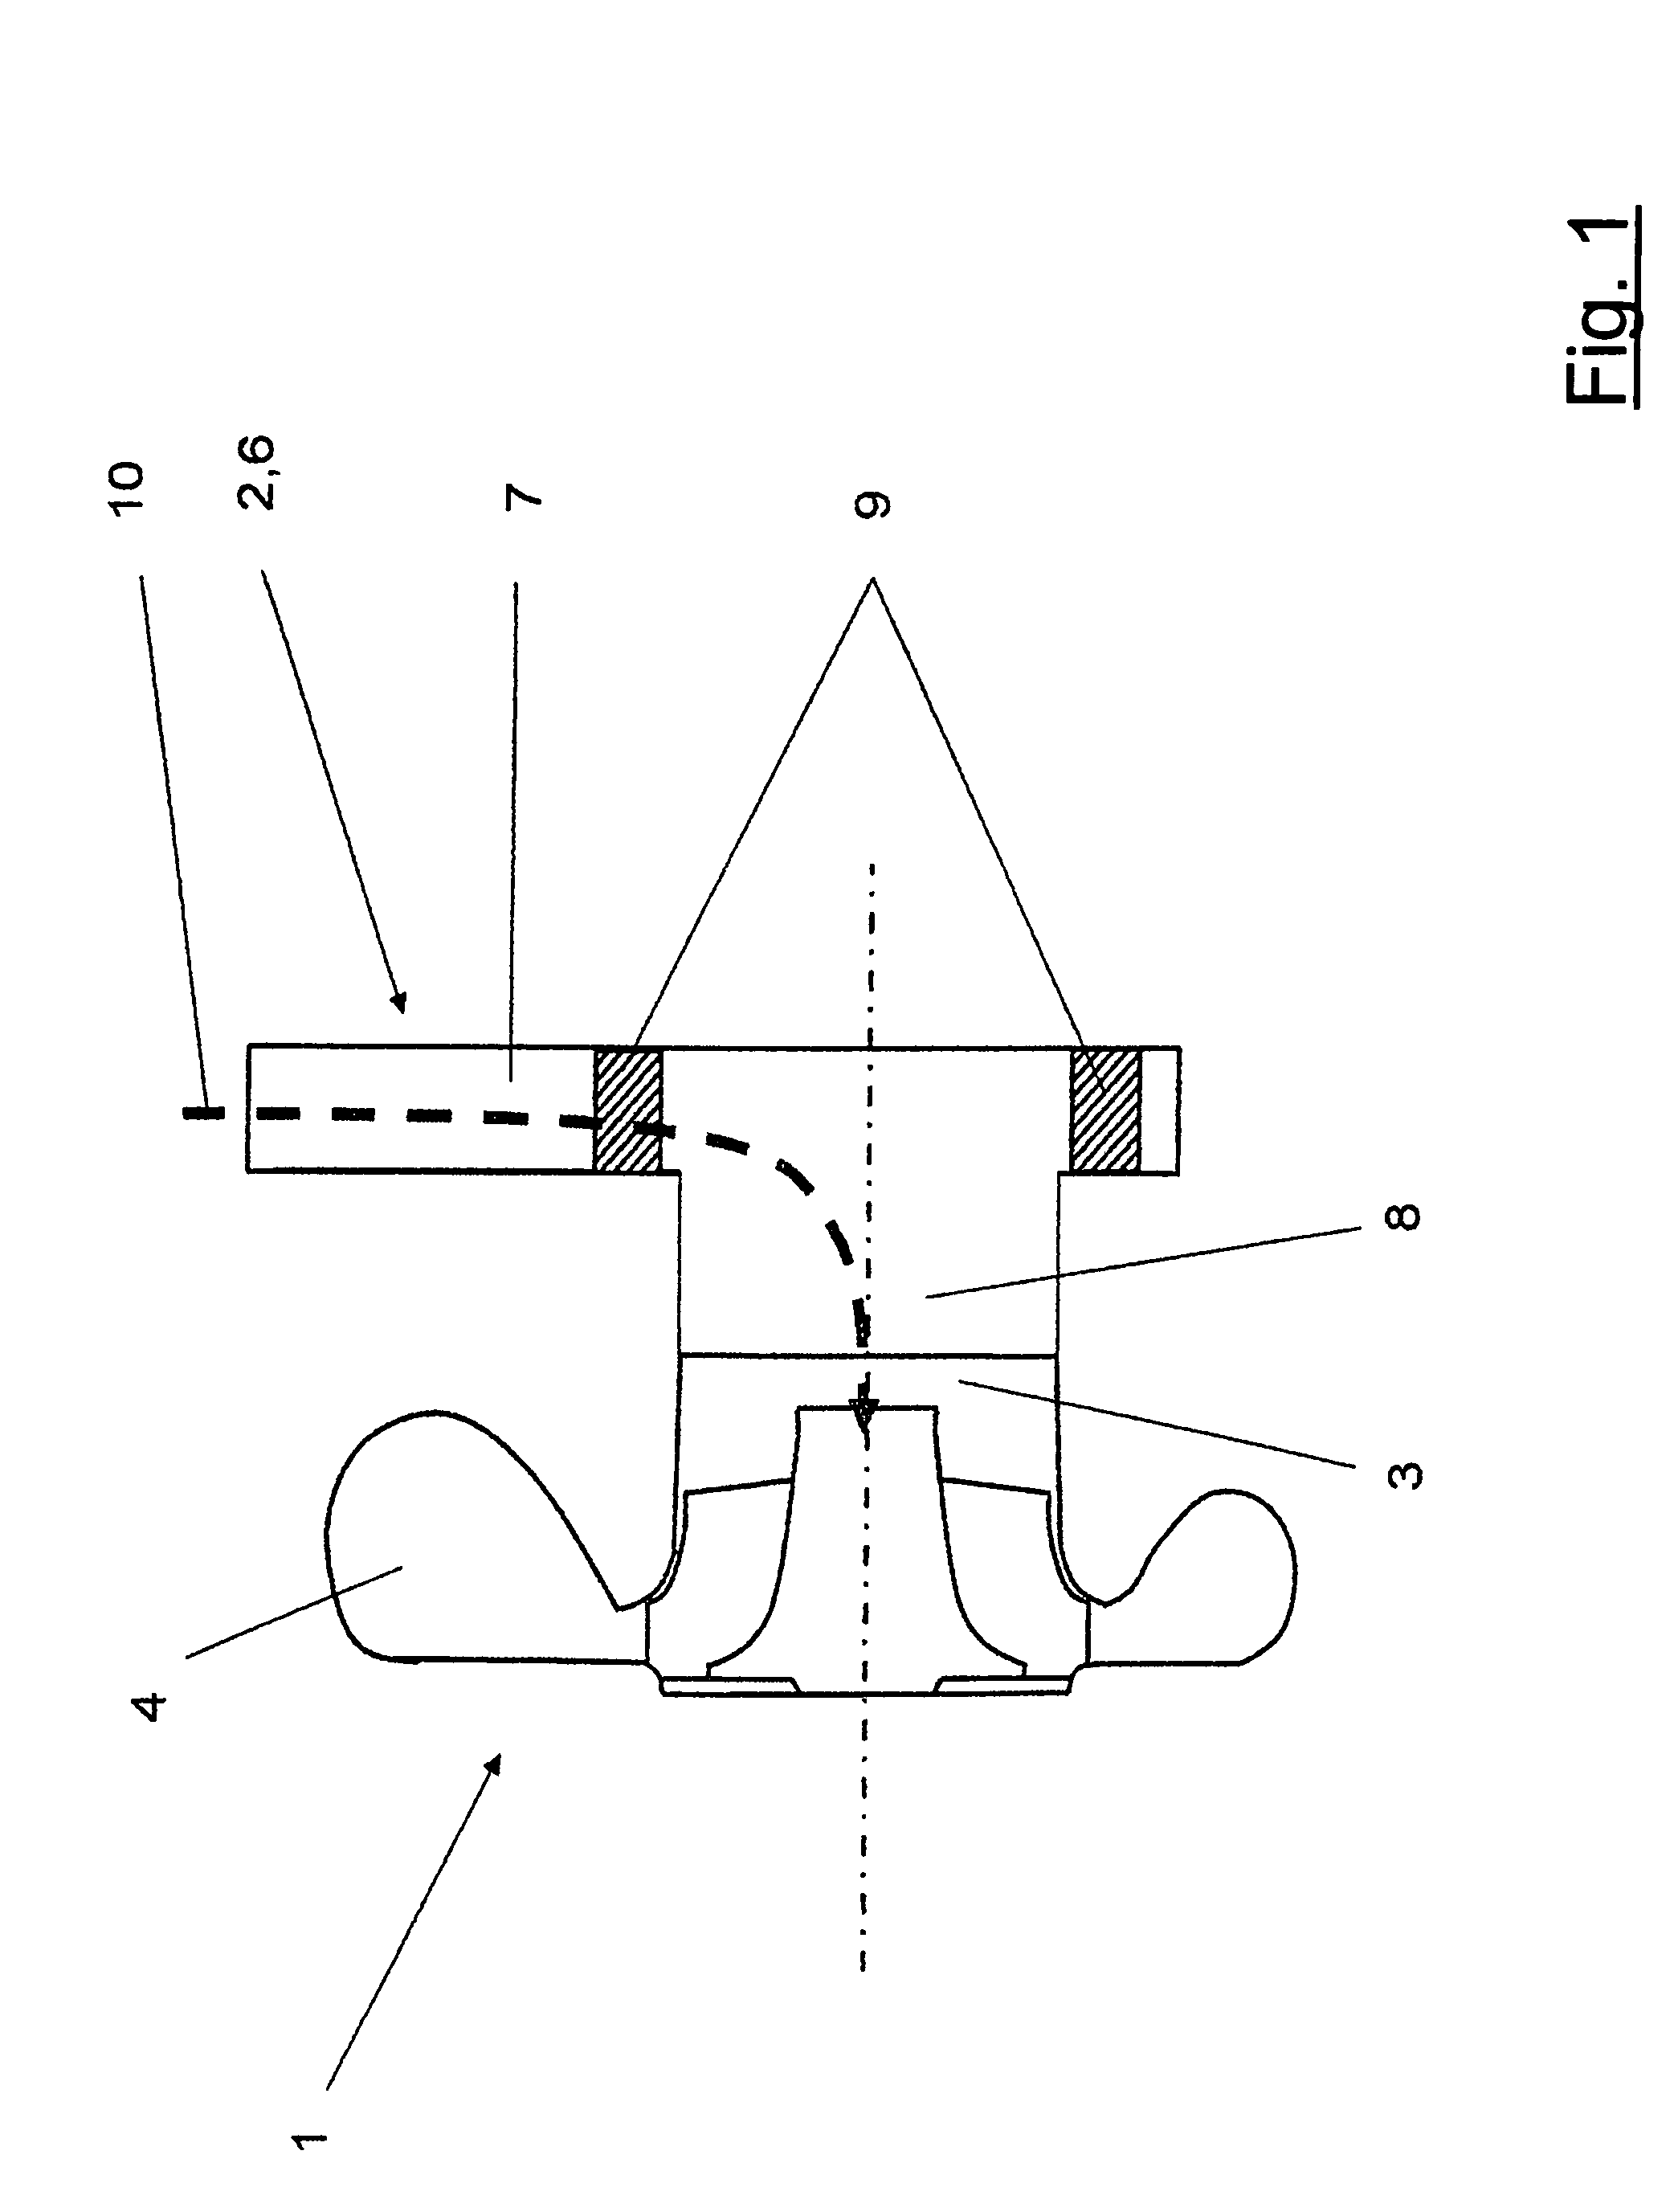 Swirl generator for a radial compressor